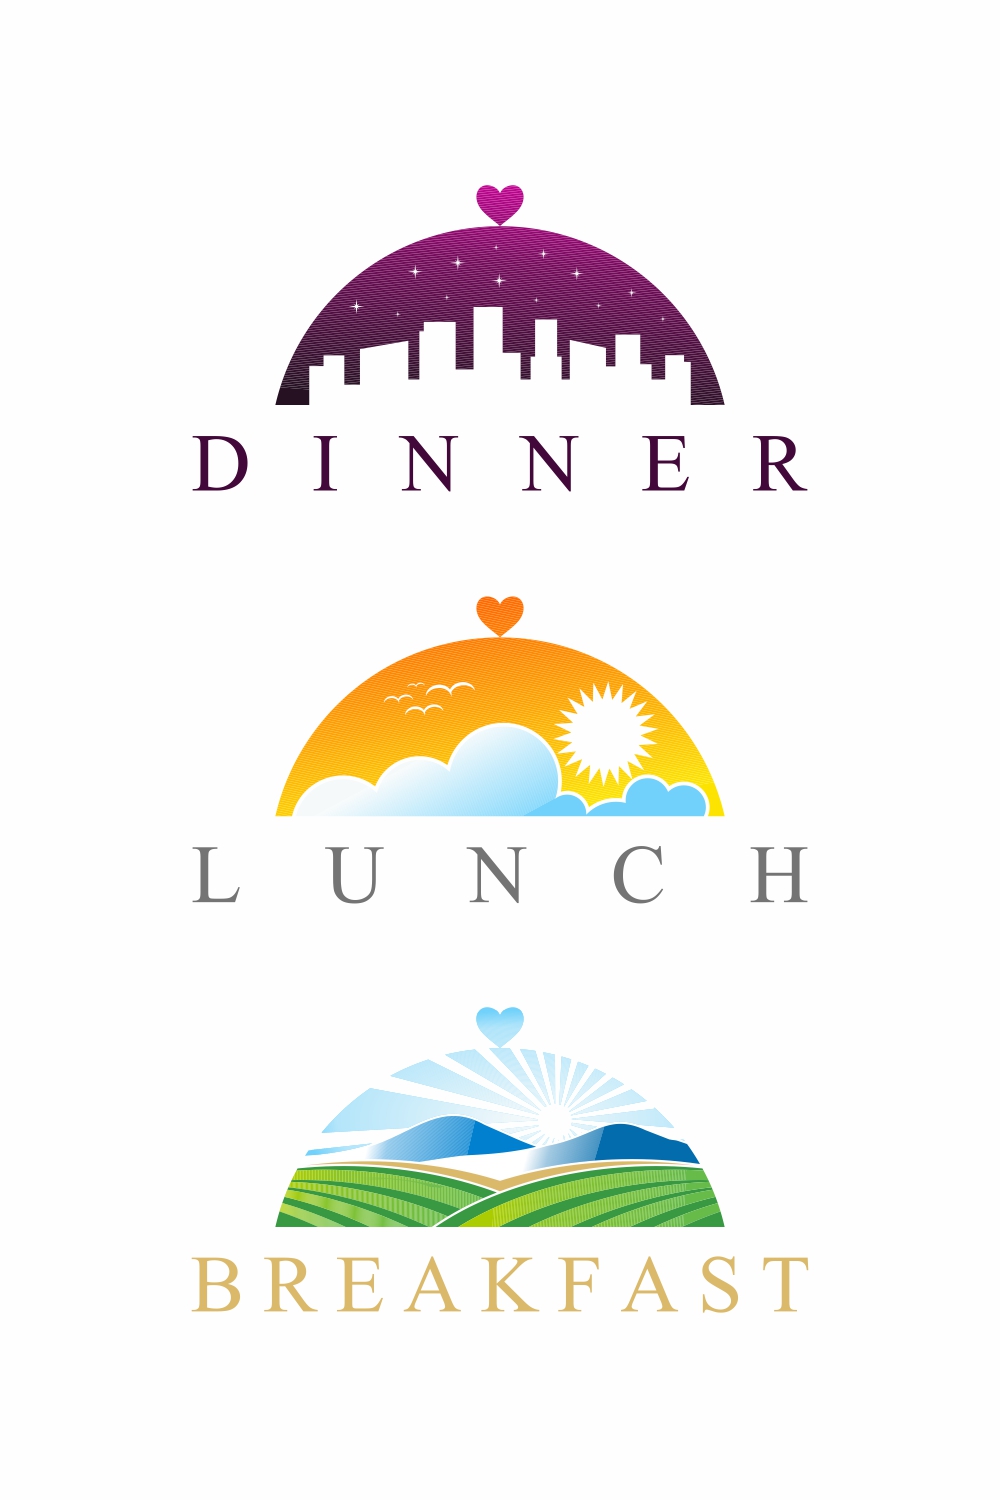 Restaurant dish logo design vector illustration - only 8$ pinterest preview image.